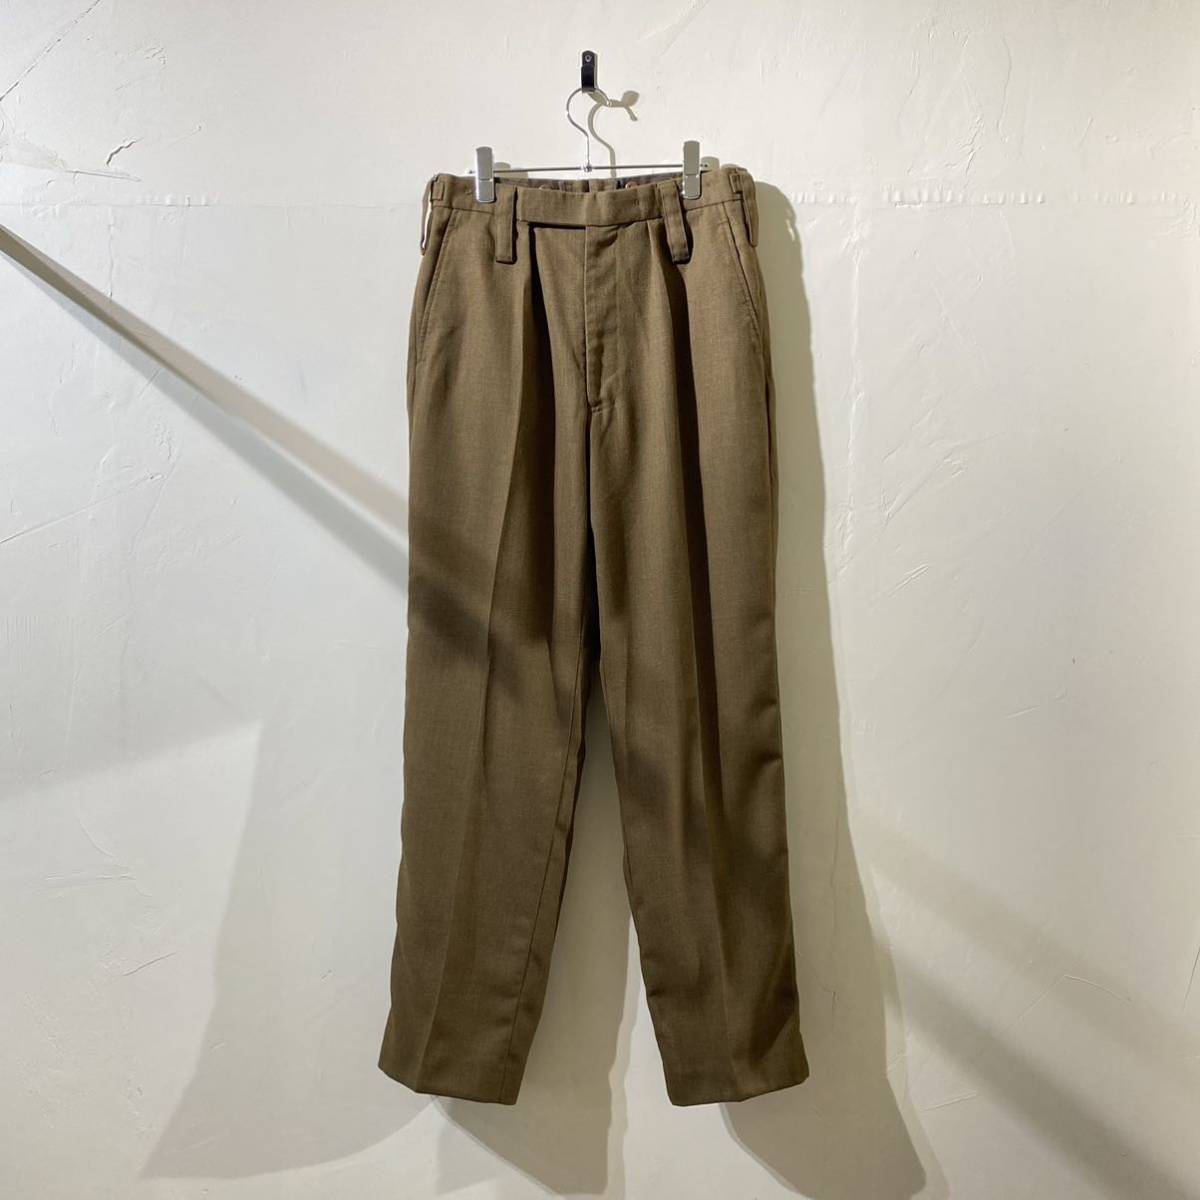 vintage military wool poly dress brown pants イギリス軍 古着 ミリタリー ウールポリドレスブラウンパンツ 軍物 ビンテージ_画像1